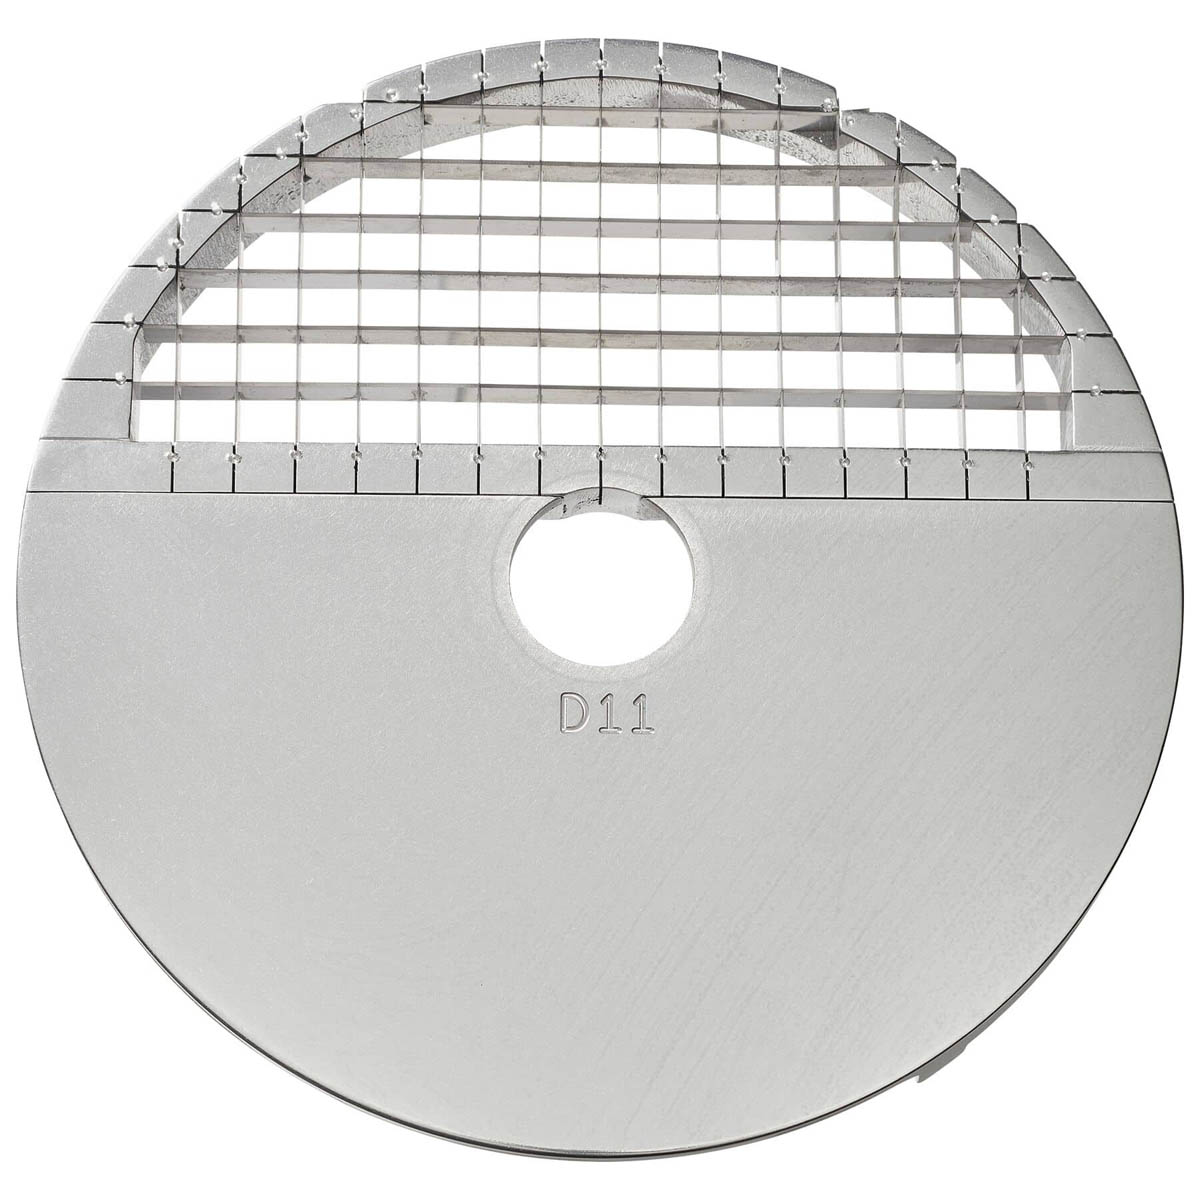 Berkel DICE-D11 Dicing Disc Plate Food Processor